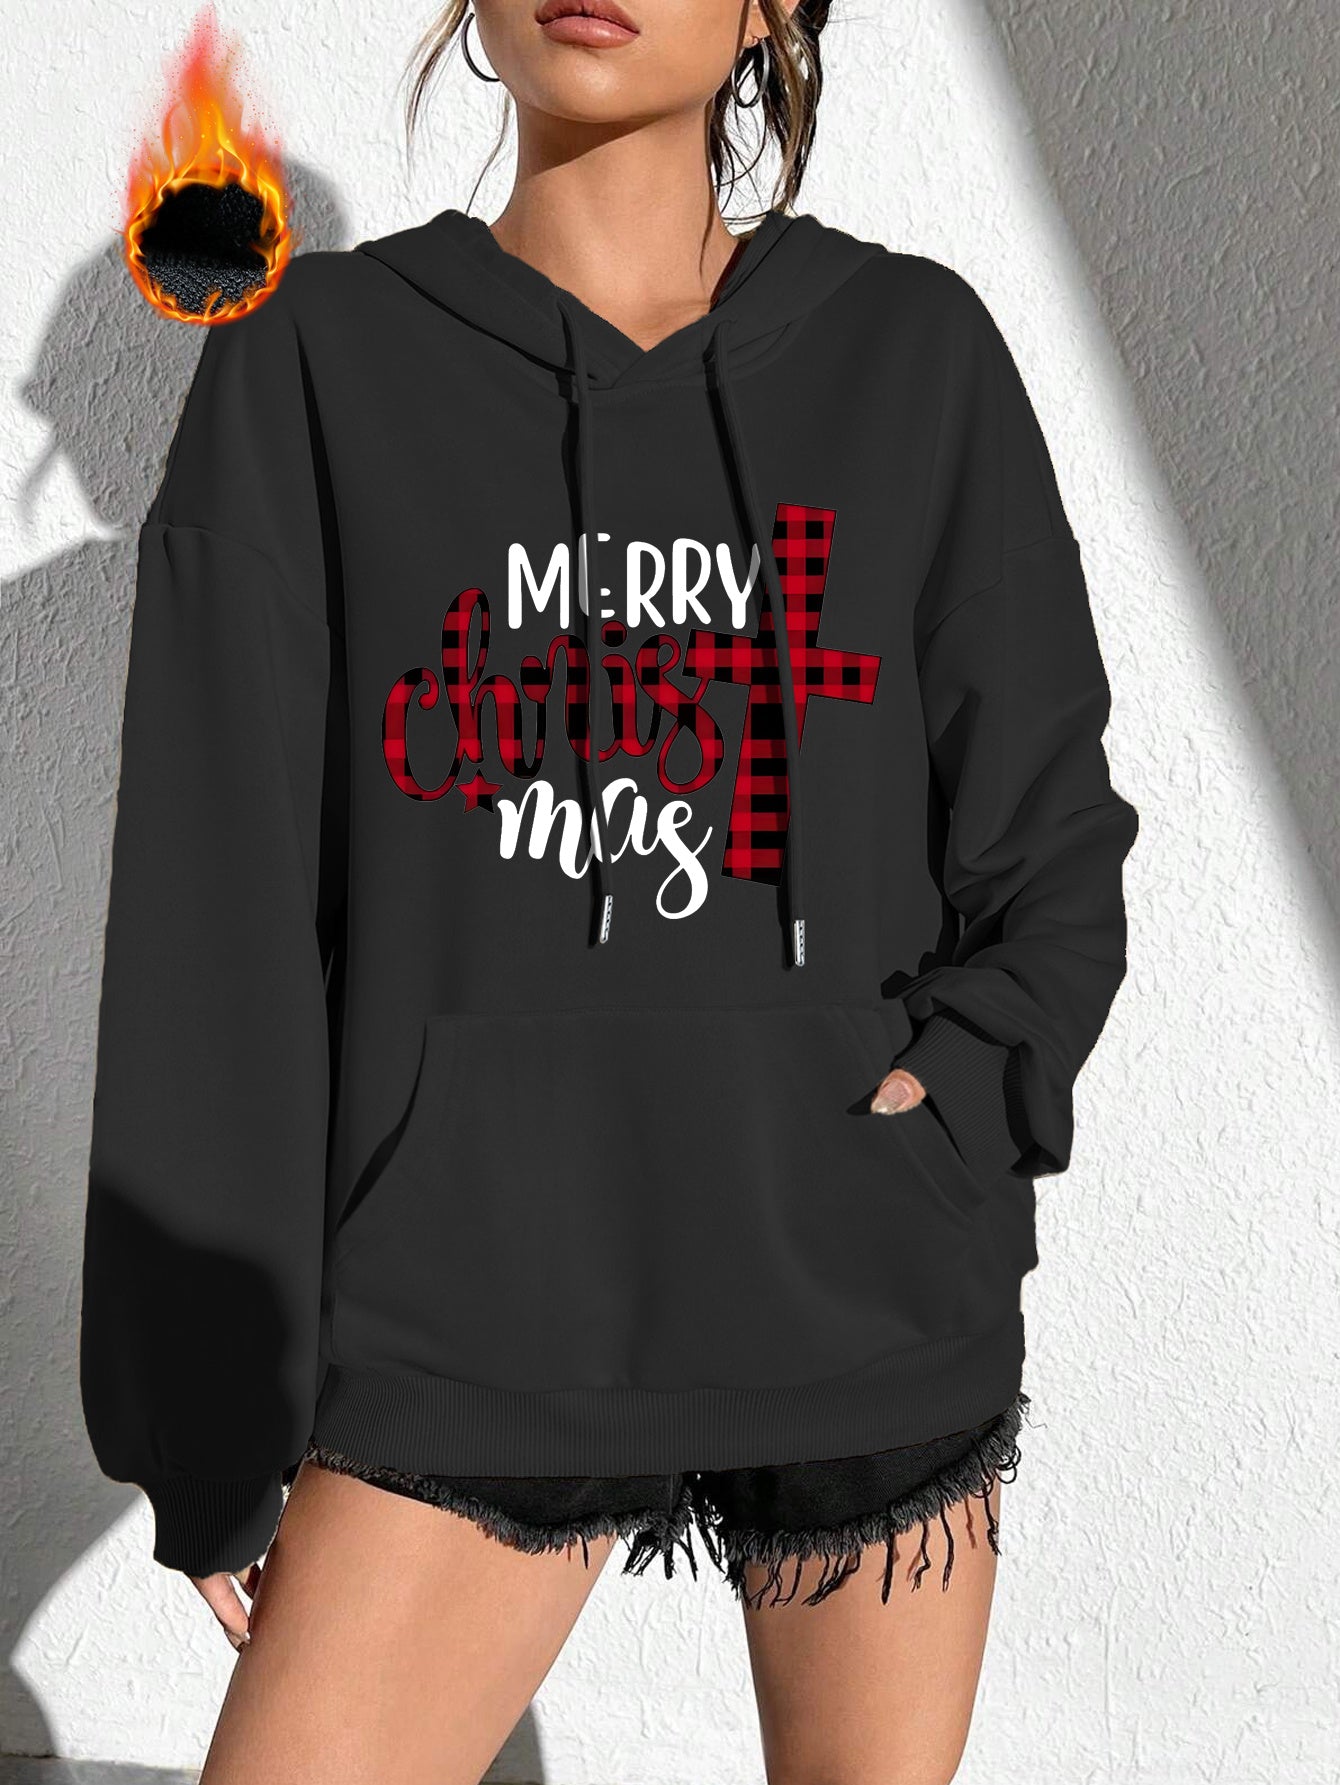 Merry CHRISTmas Women's Christian Pullover Hooded Sweatshirt claimedbygoddesigns